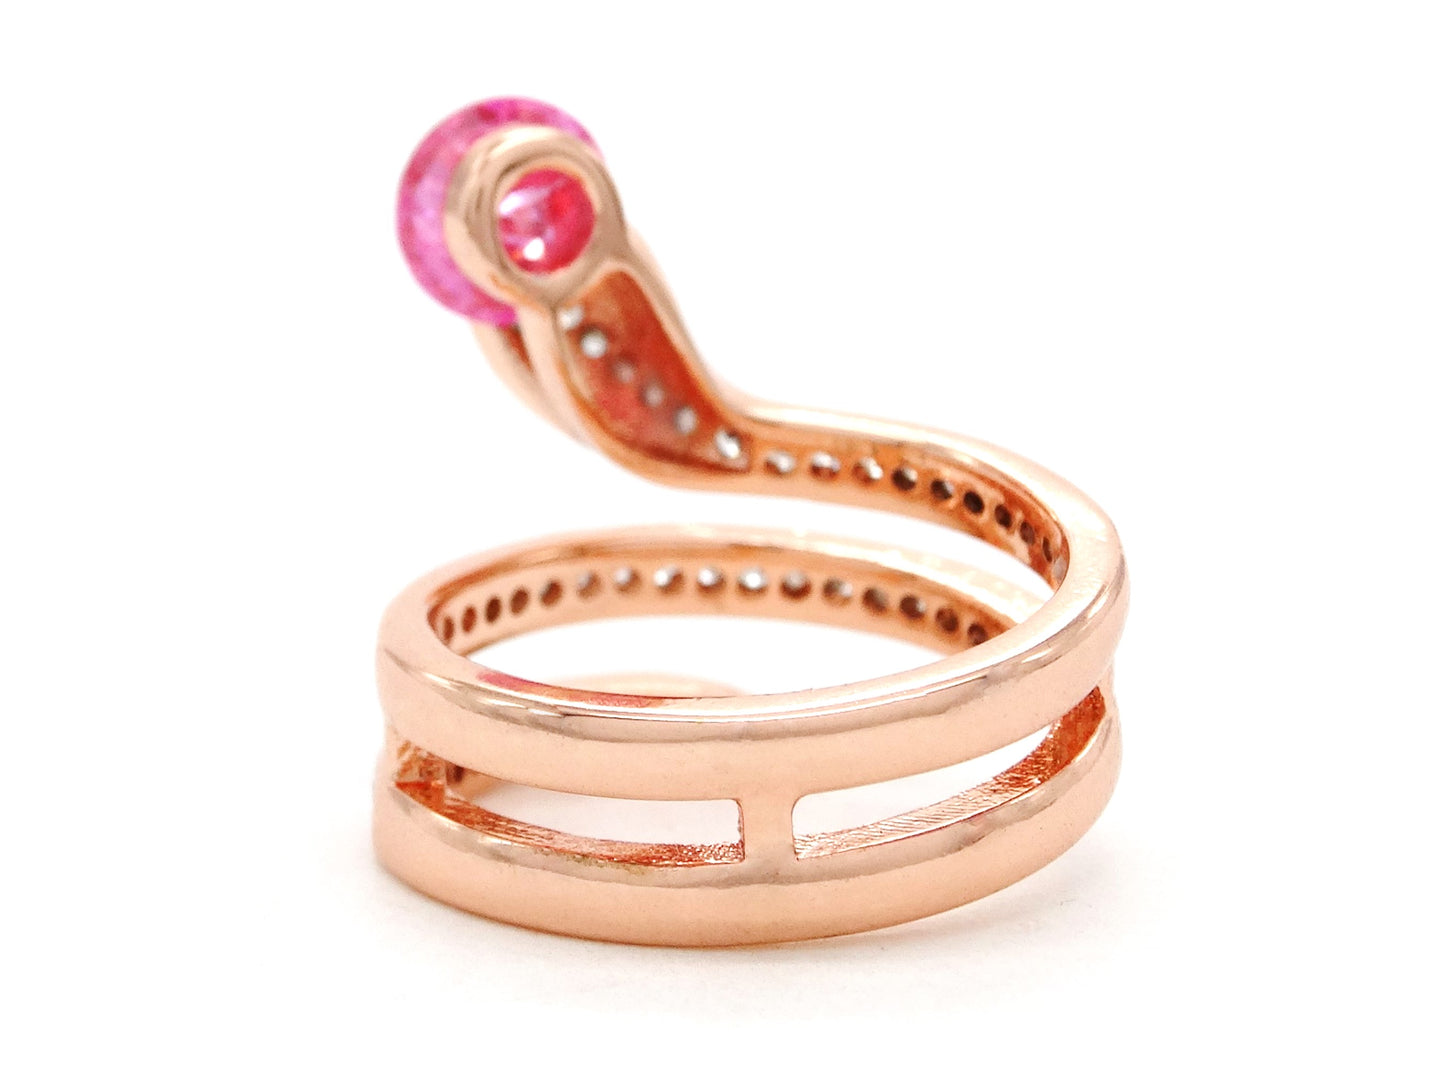 Rose gold snake ring with pink gemstone BACK